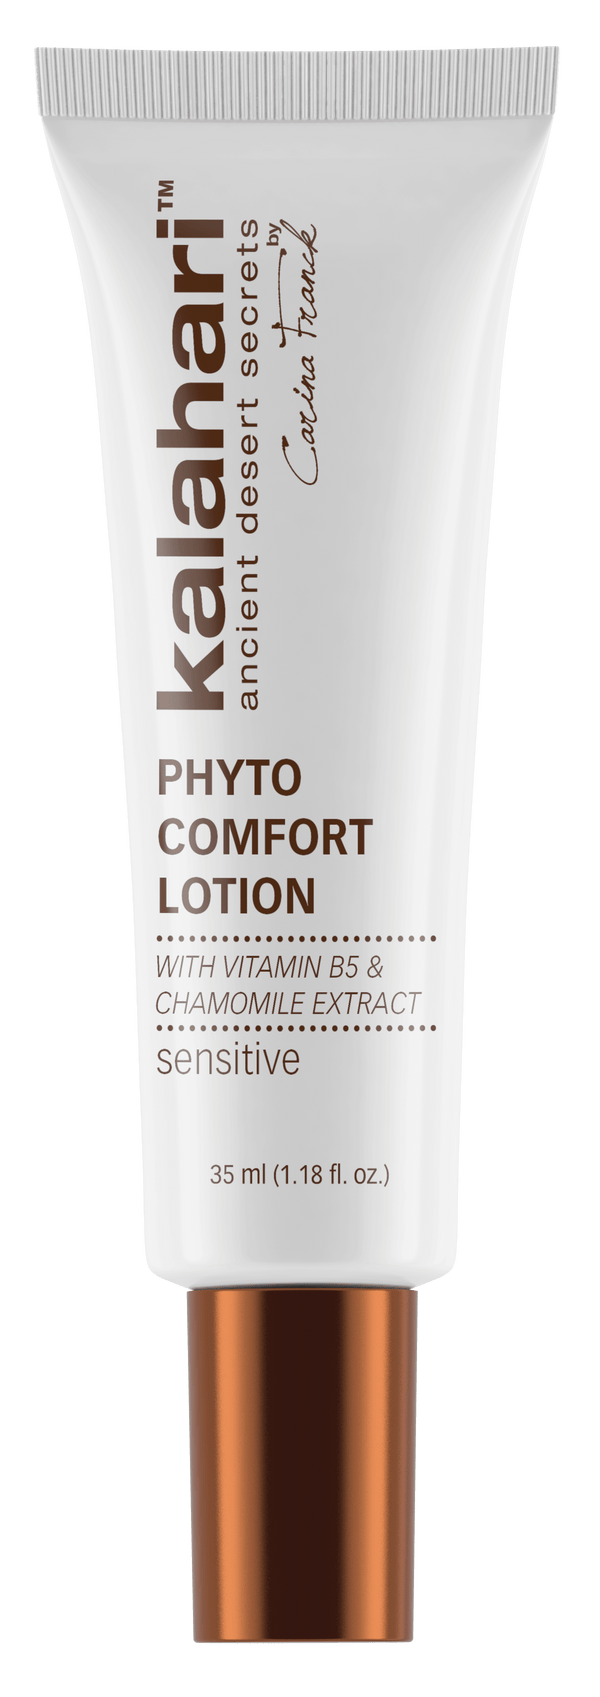 Phyto comfort lotion